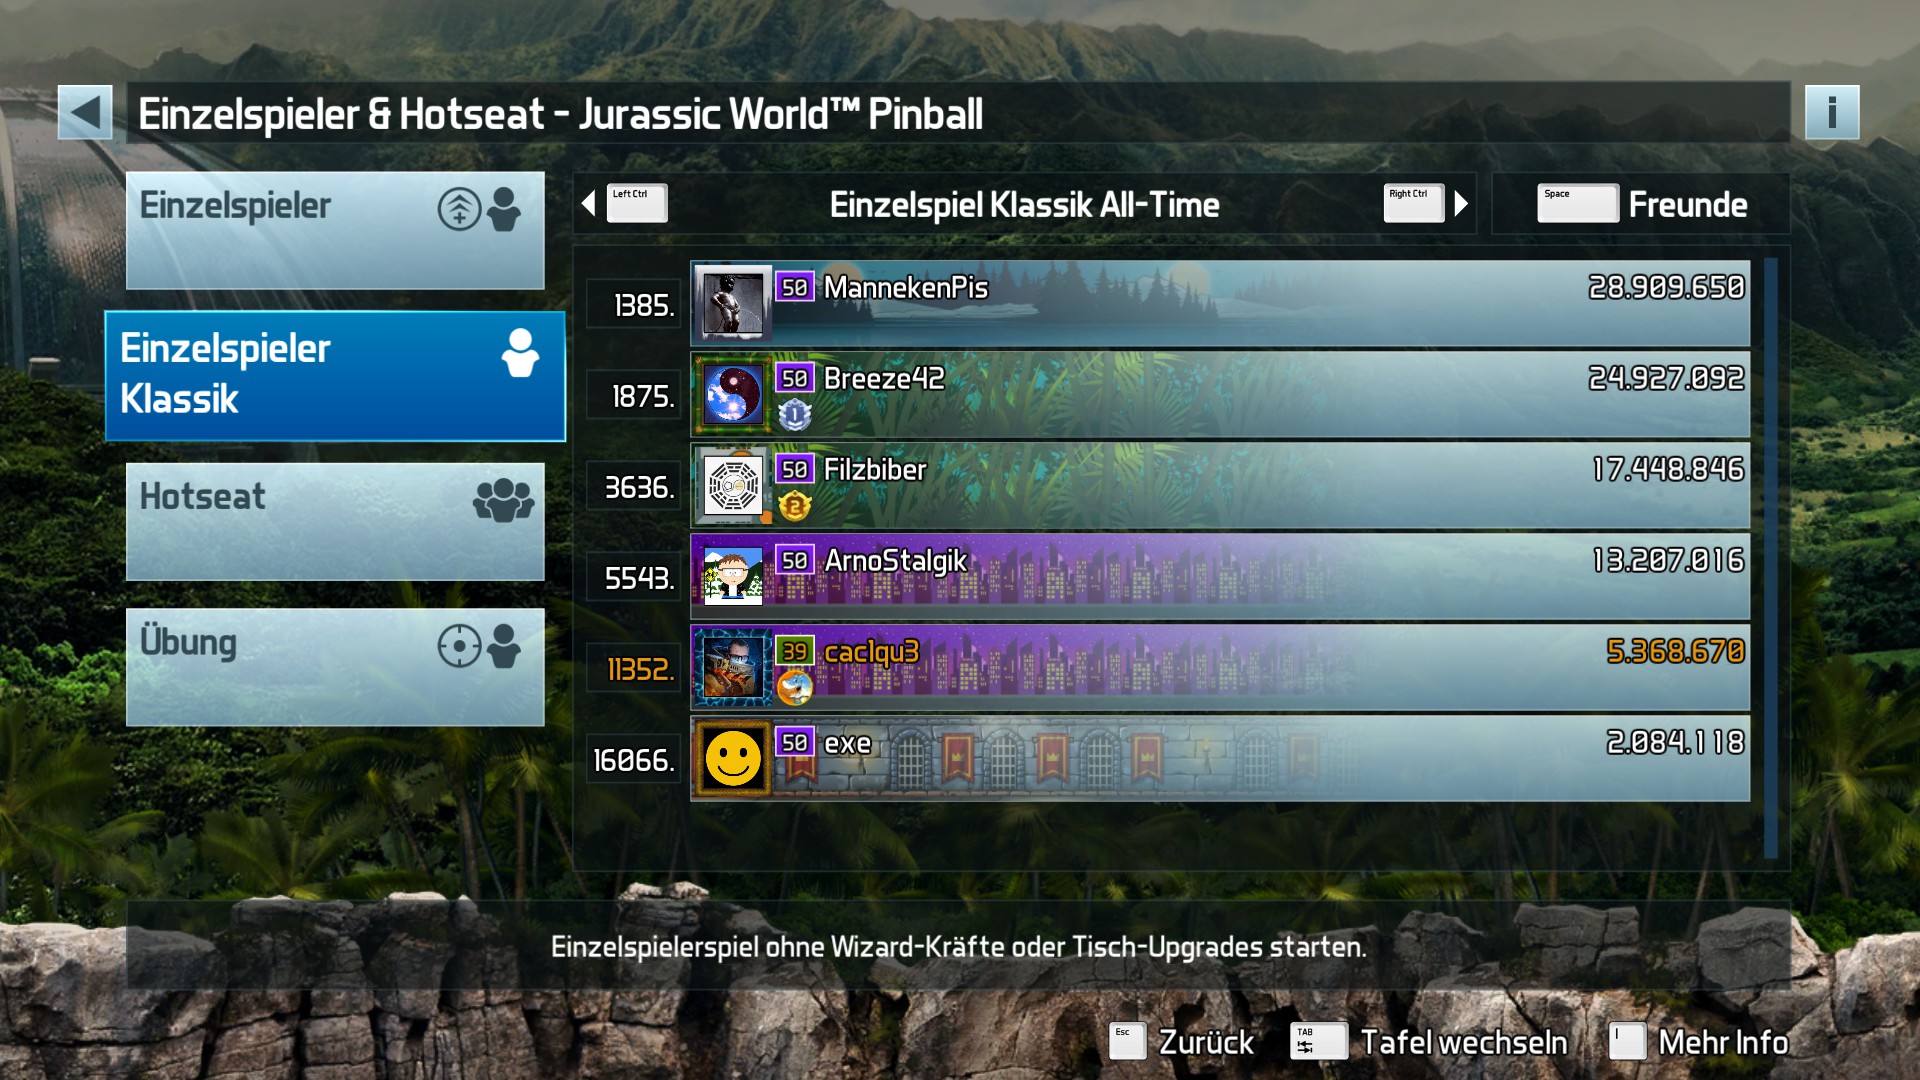 e2e4: Pinball FX3: Jurassic World Pinball [Classic] (PC) 5,368,670 points on 2022-05-15 18:41:31